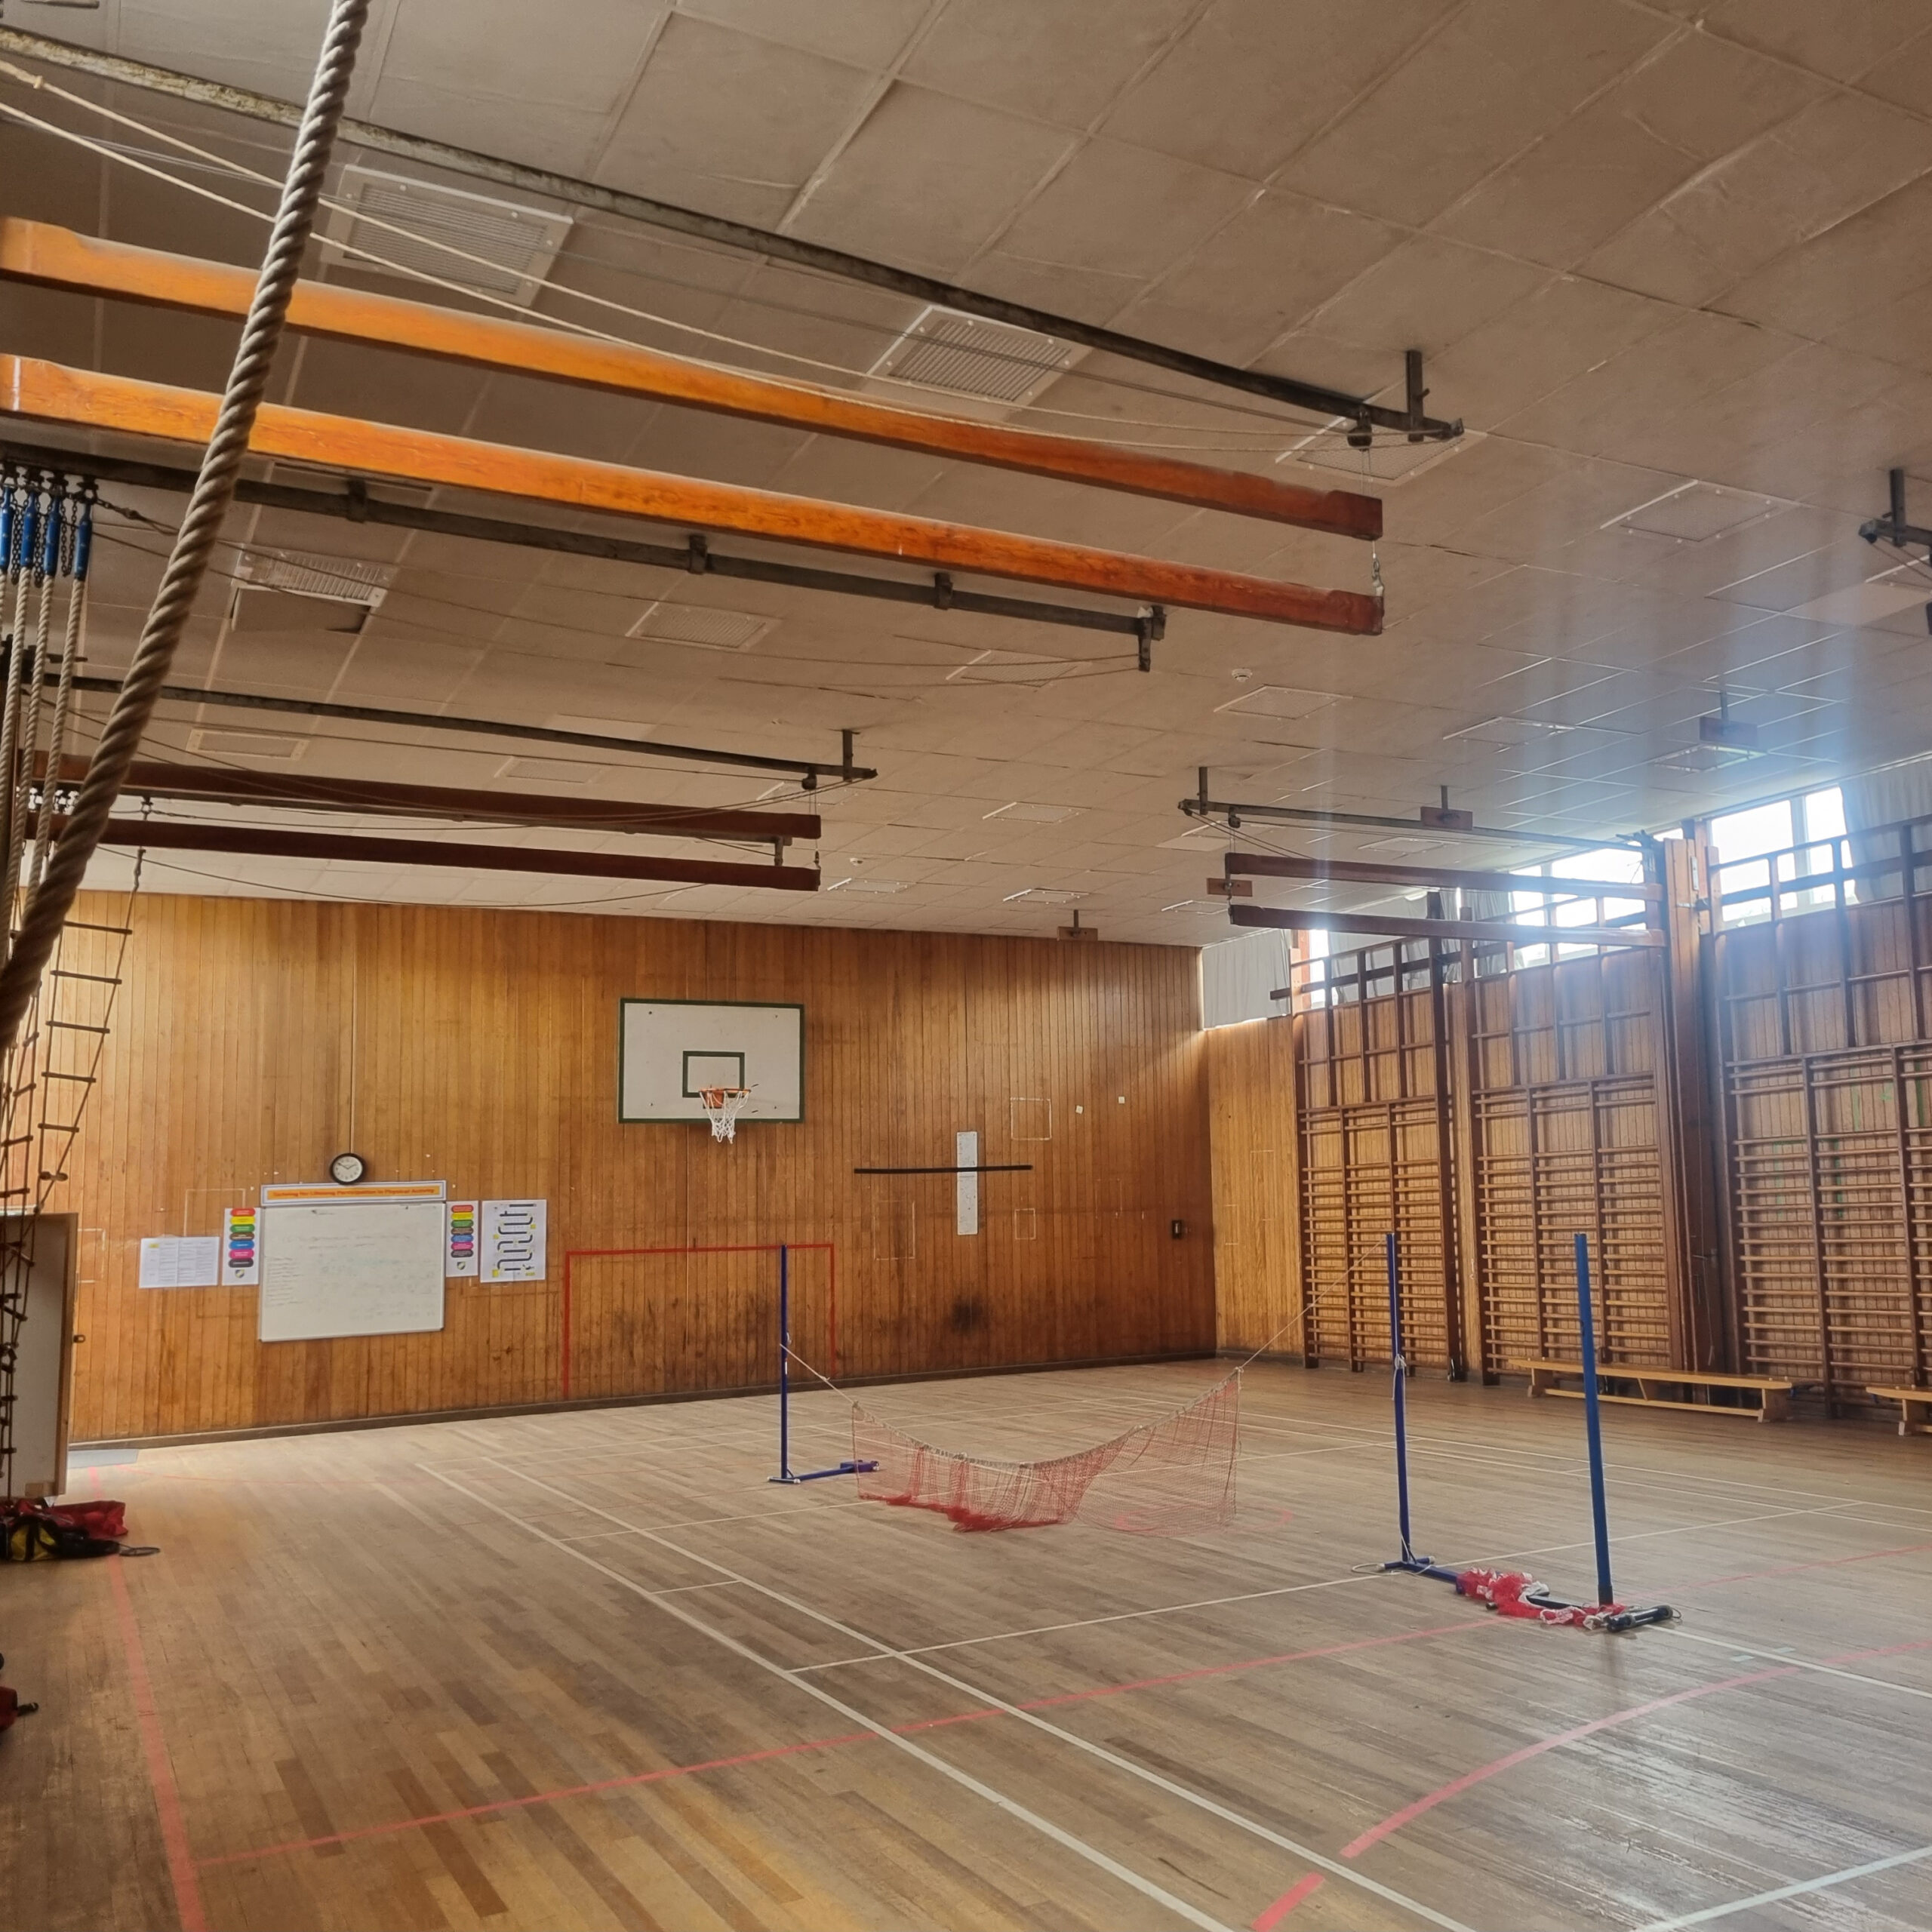 Interior school gymnasium